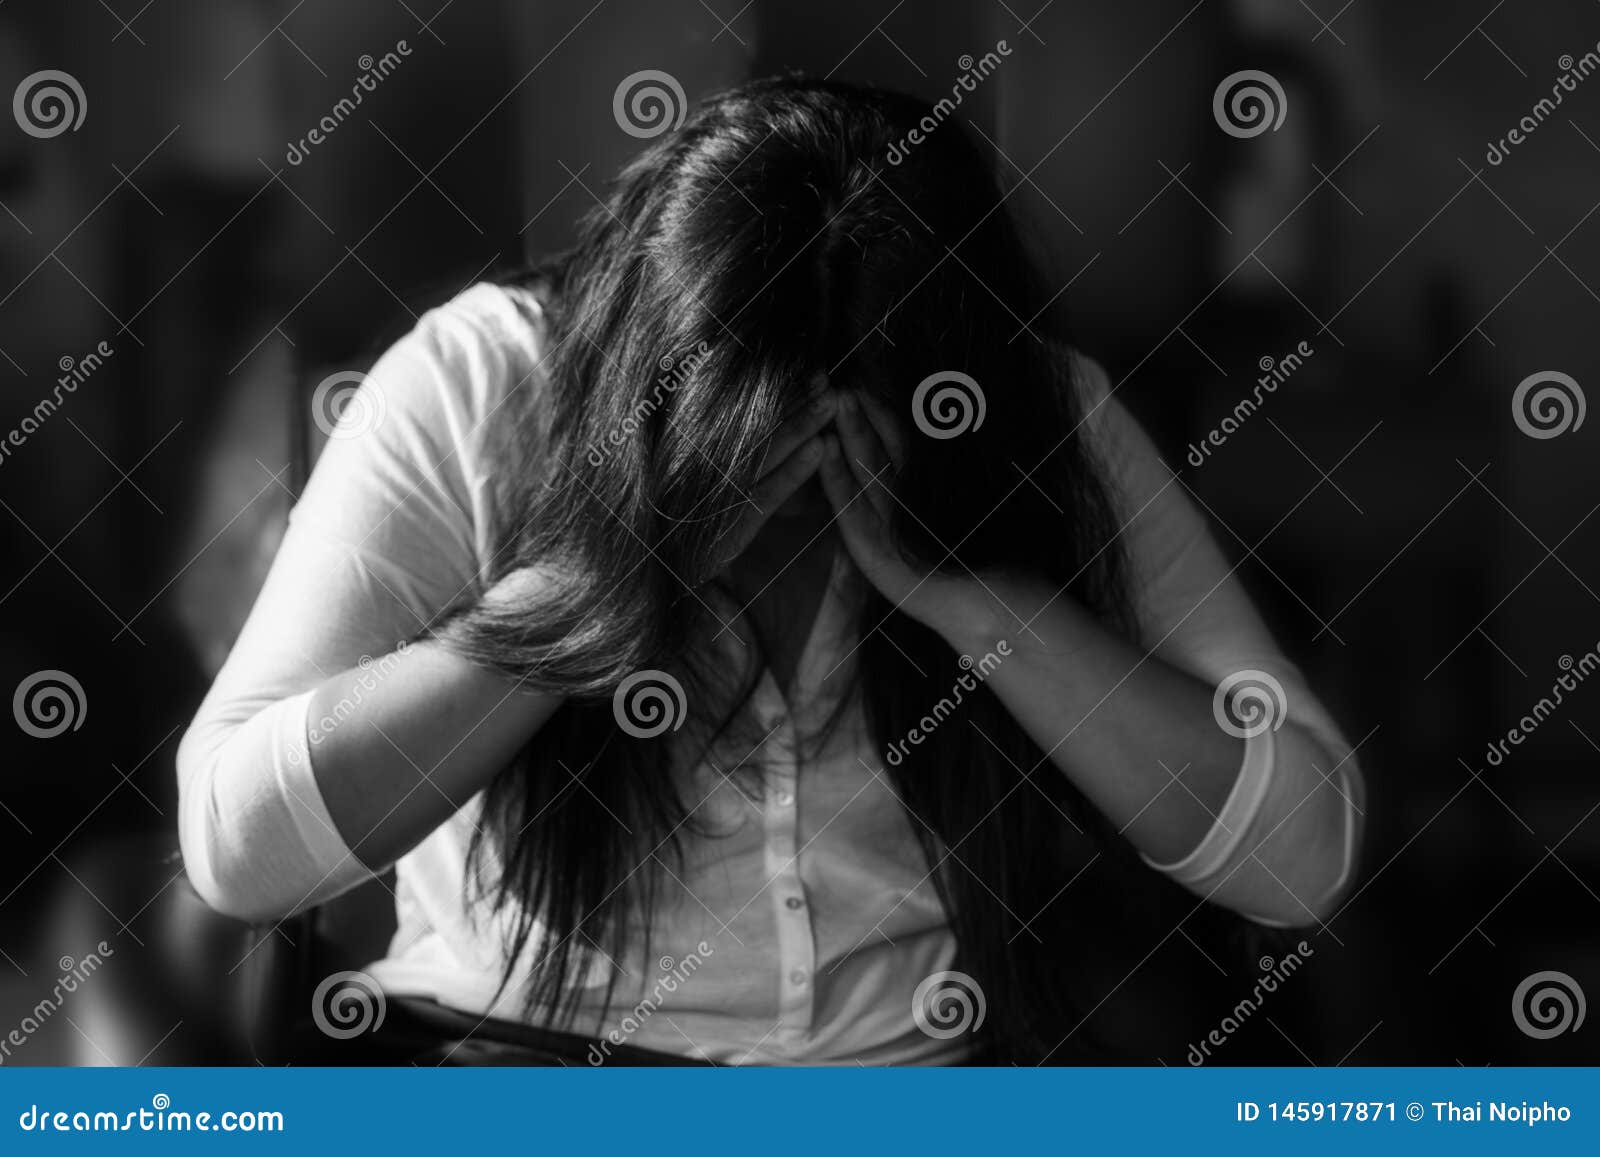 Crying Girl, Young Sad Woman Stock Image - Image of adult ...